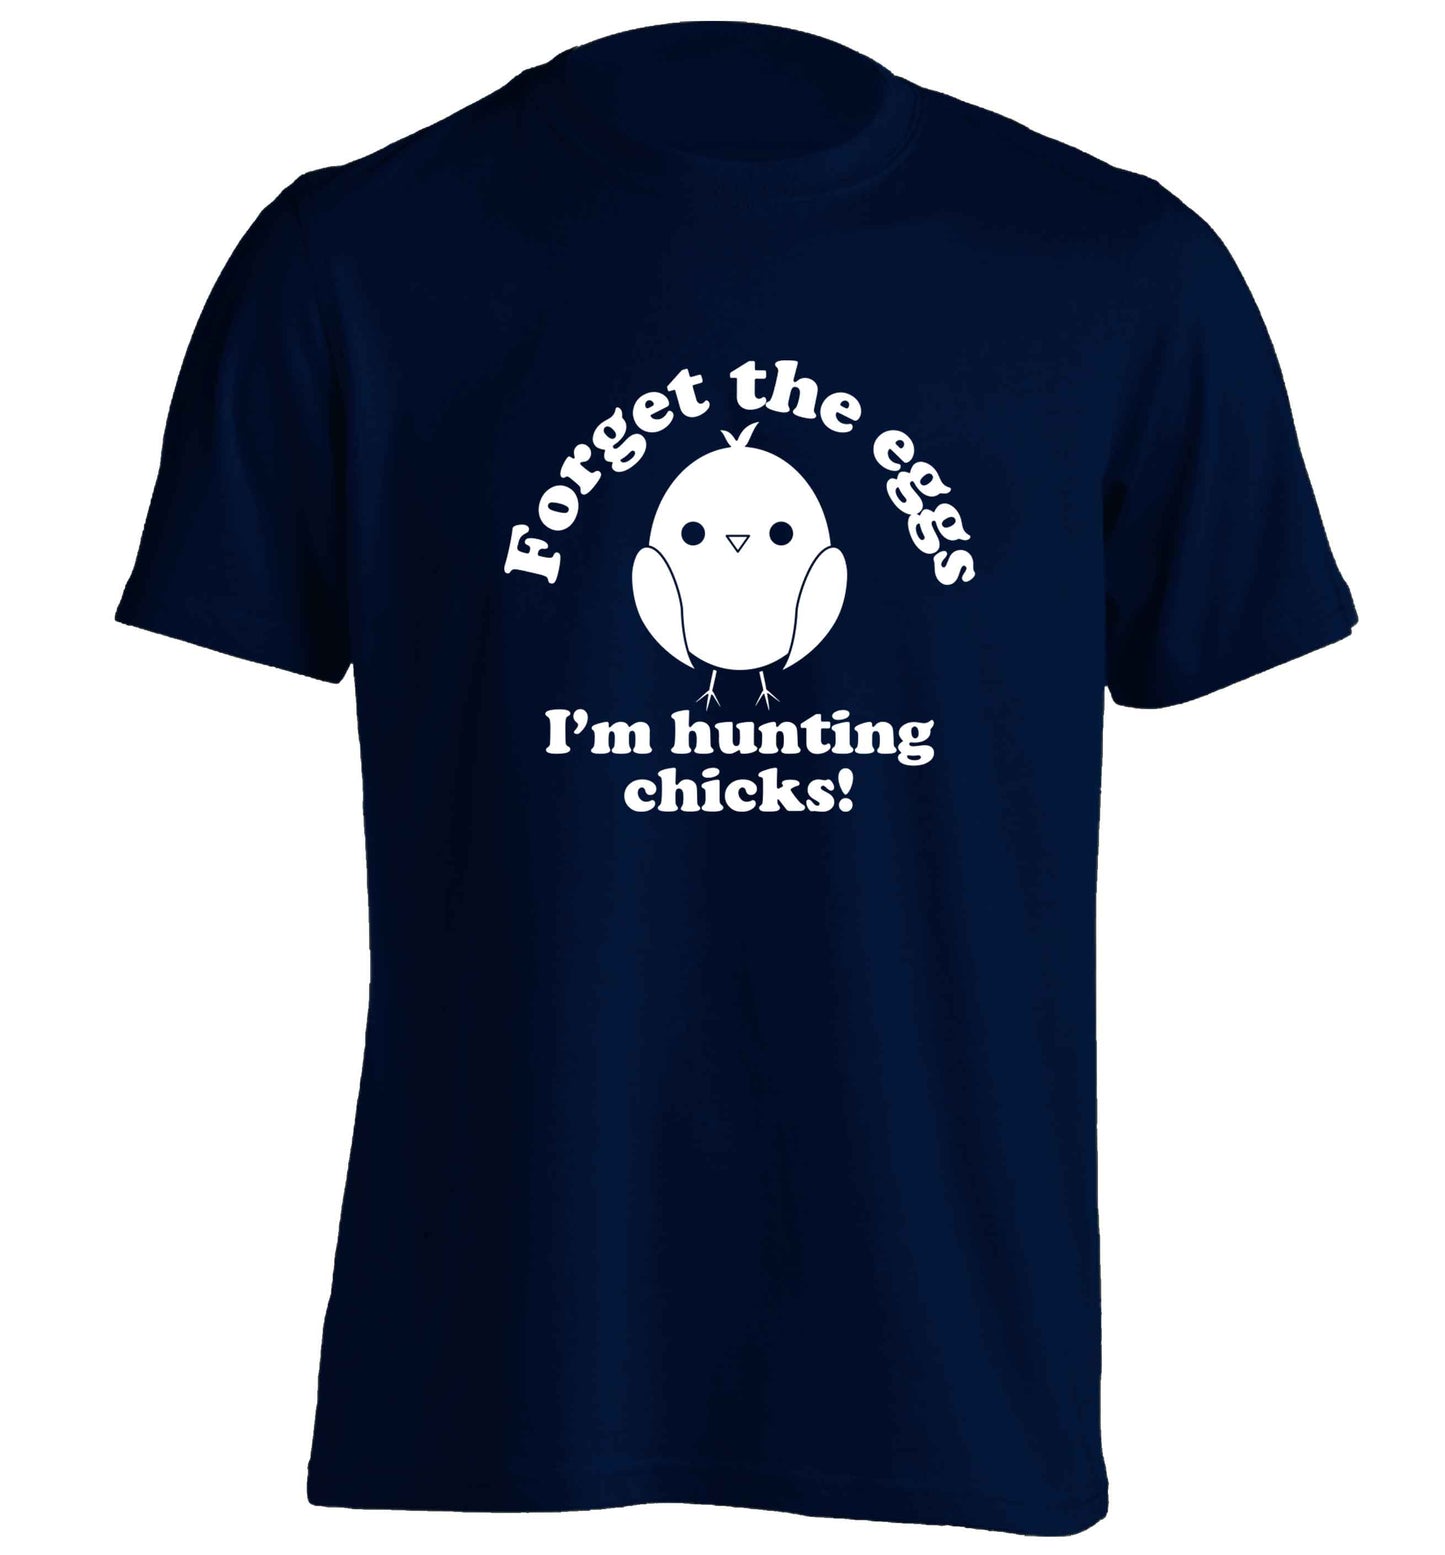 Forget the eggs I'm hunting chicks! adults unisex navy Tshirt 2XL